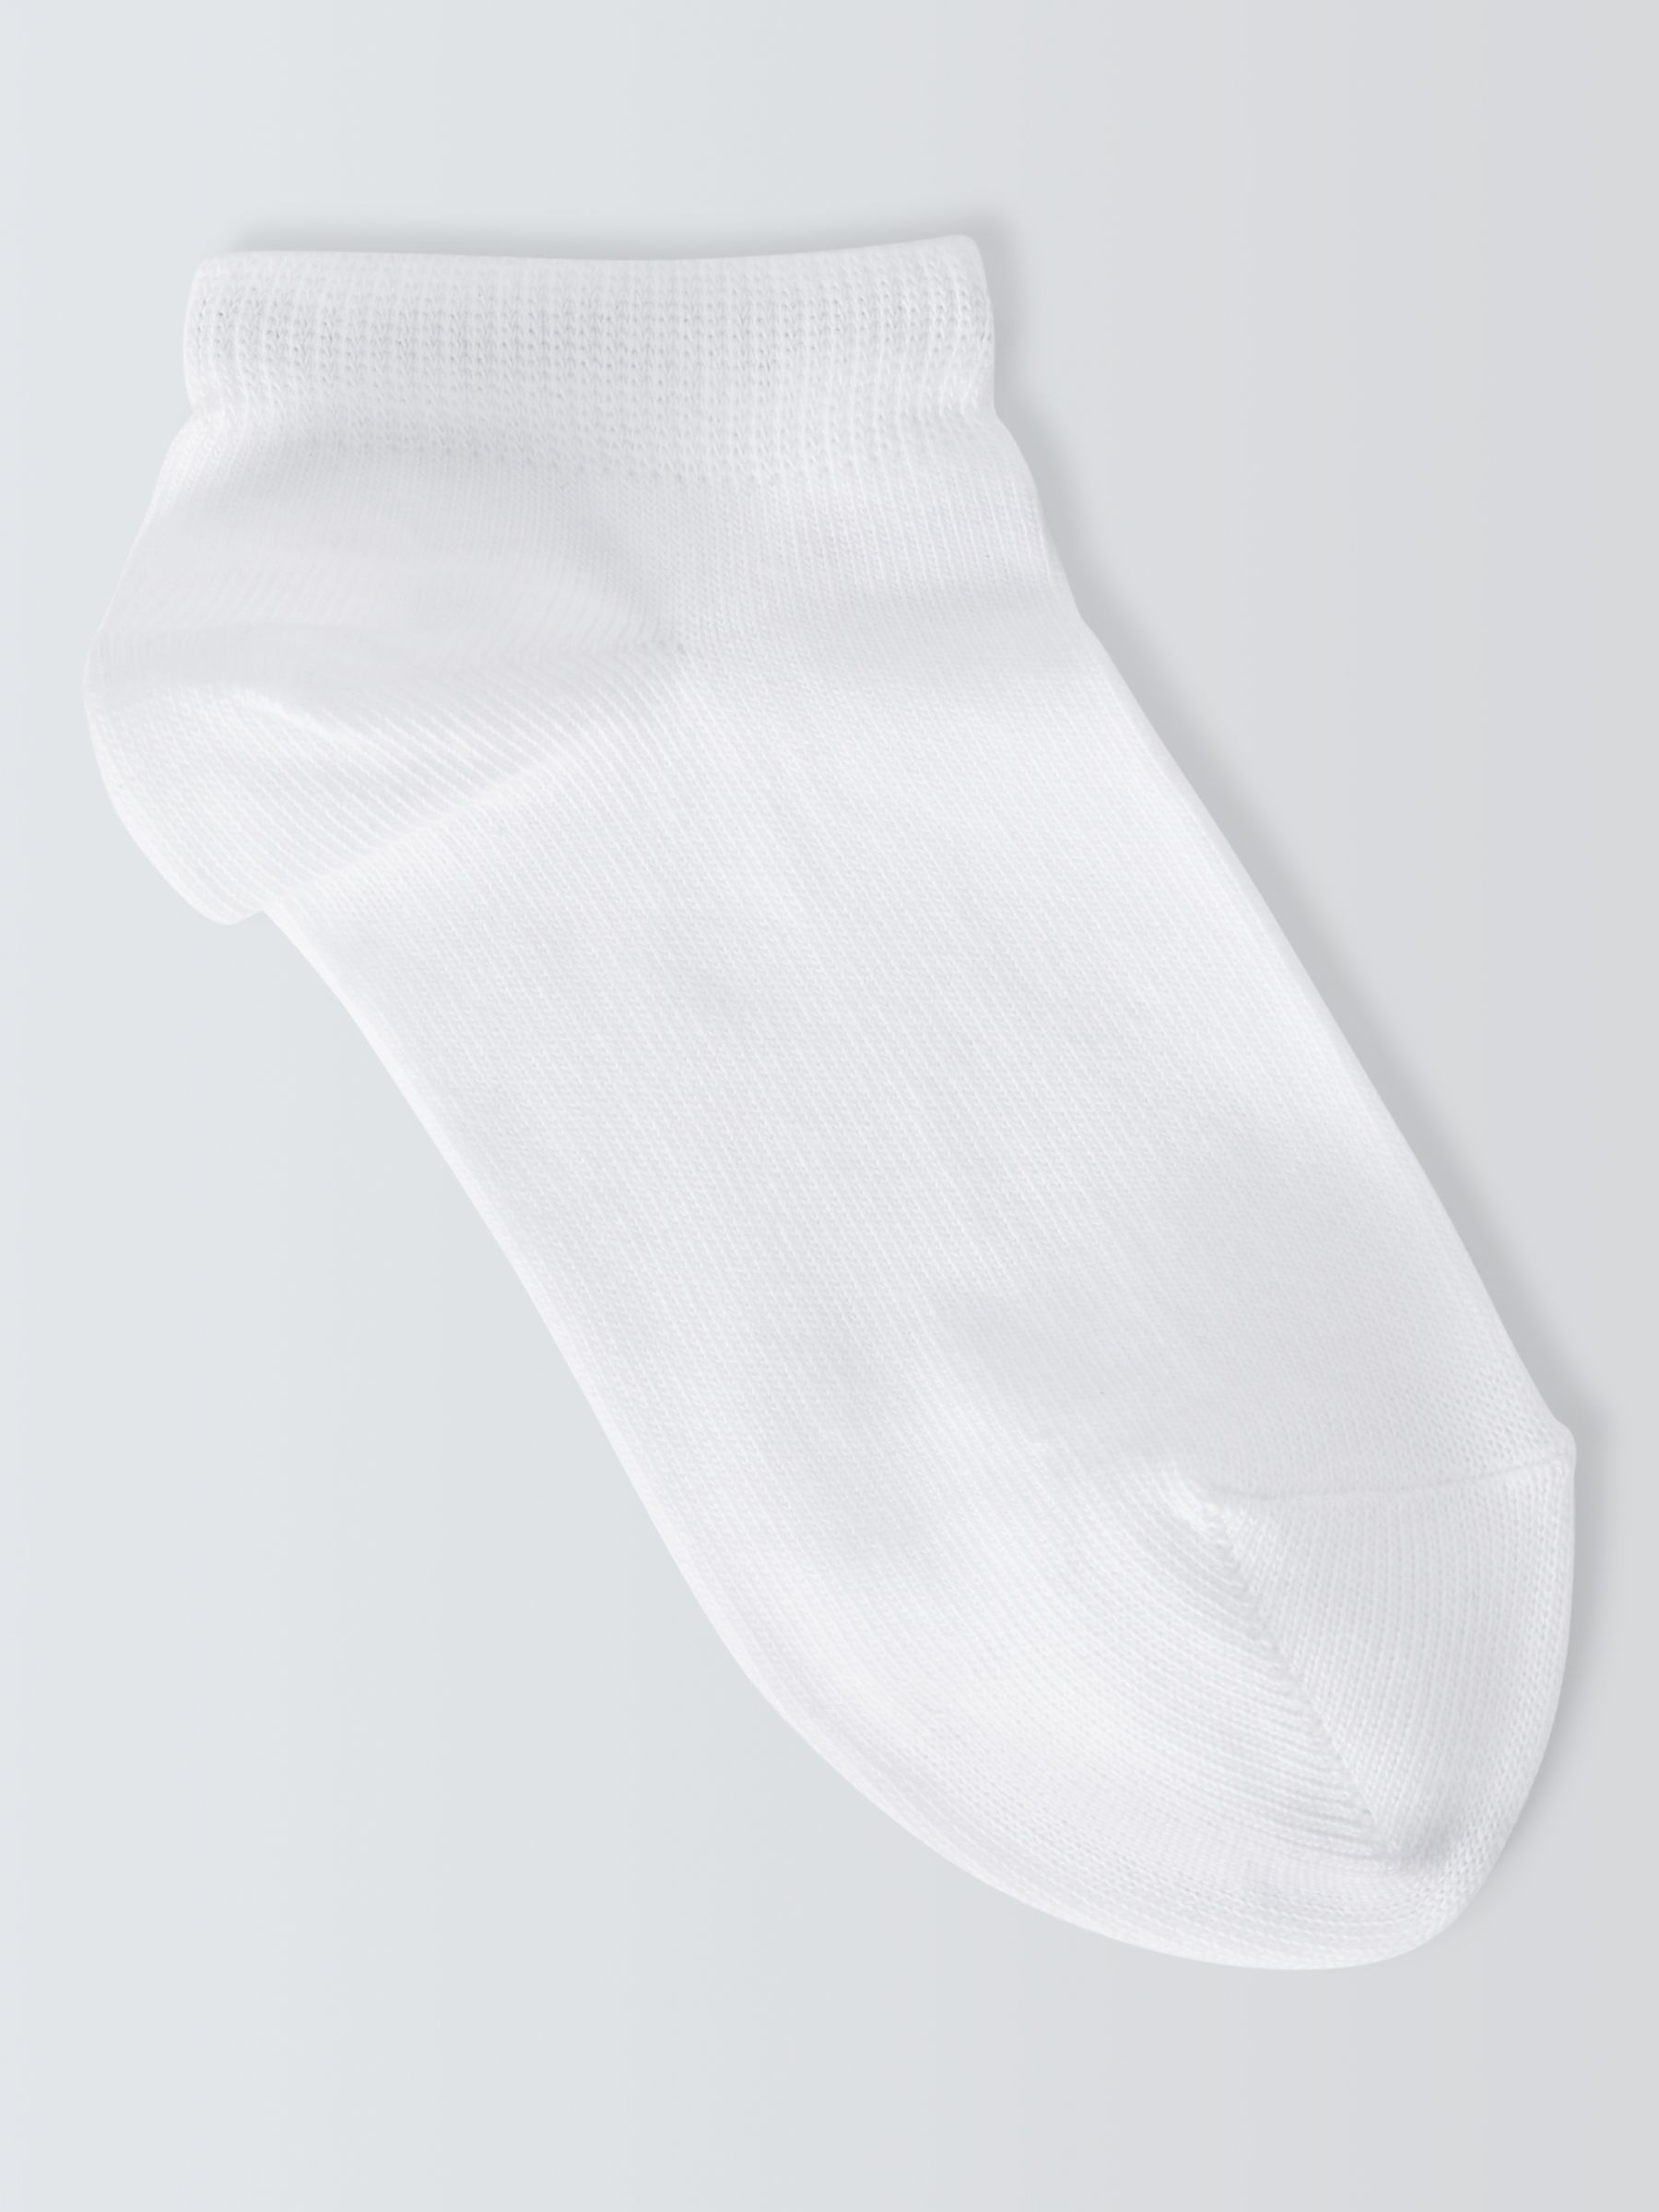 Buy John Lewis ANYDAY Kids' Trainer Liner Socks, Pack of 7, White Online at johnlewis.com